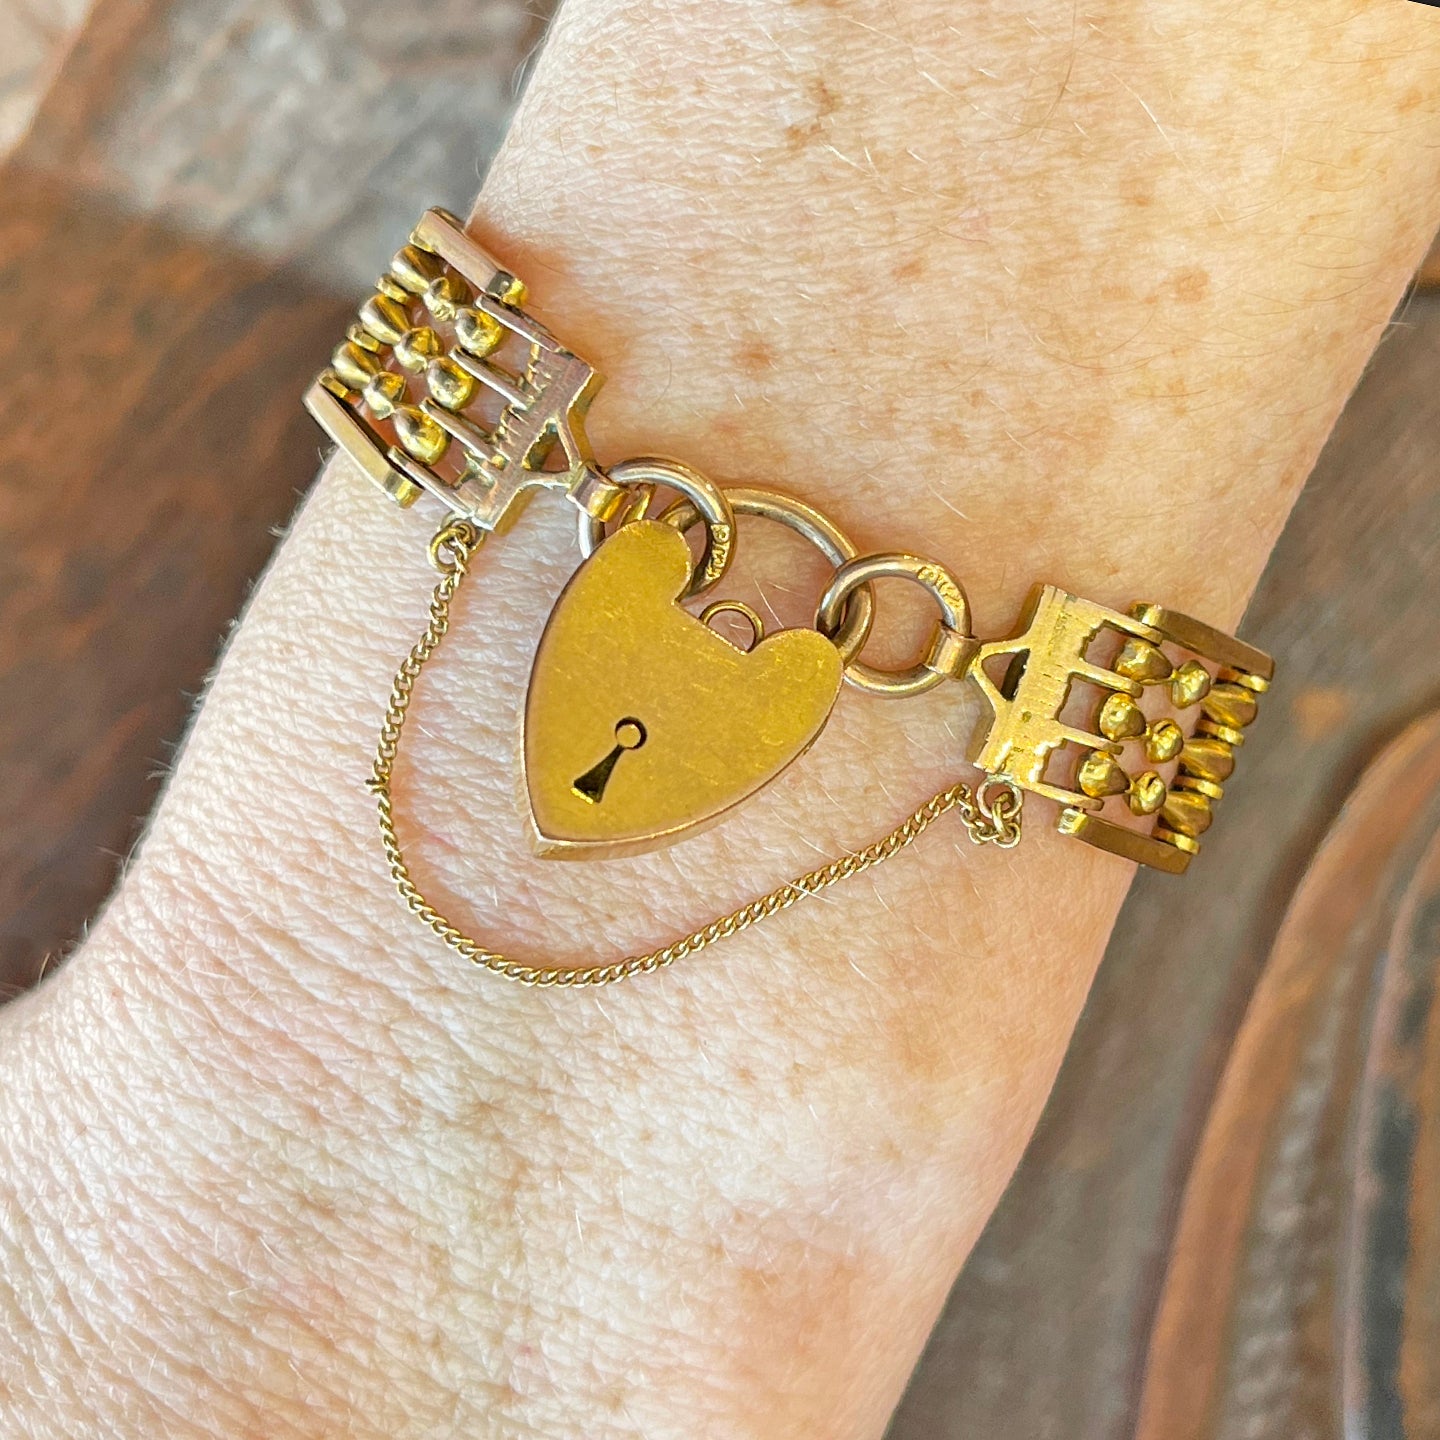 Antique Victorian 9k Gold Gate Bracelet with Heart Lock